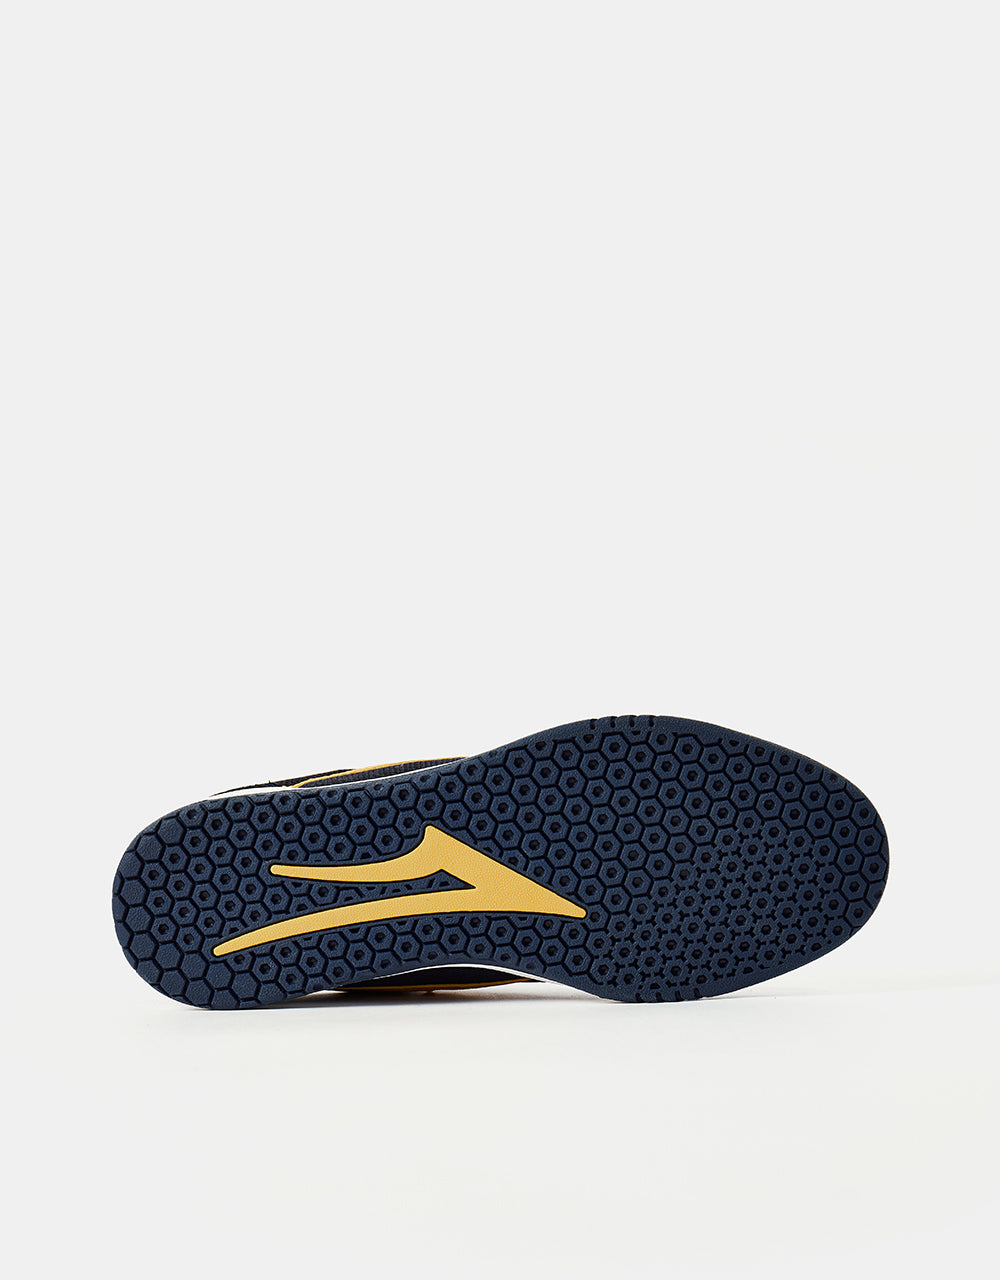 Lakai Atlantic Skate Shoes - Navy/Gold Suede